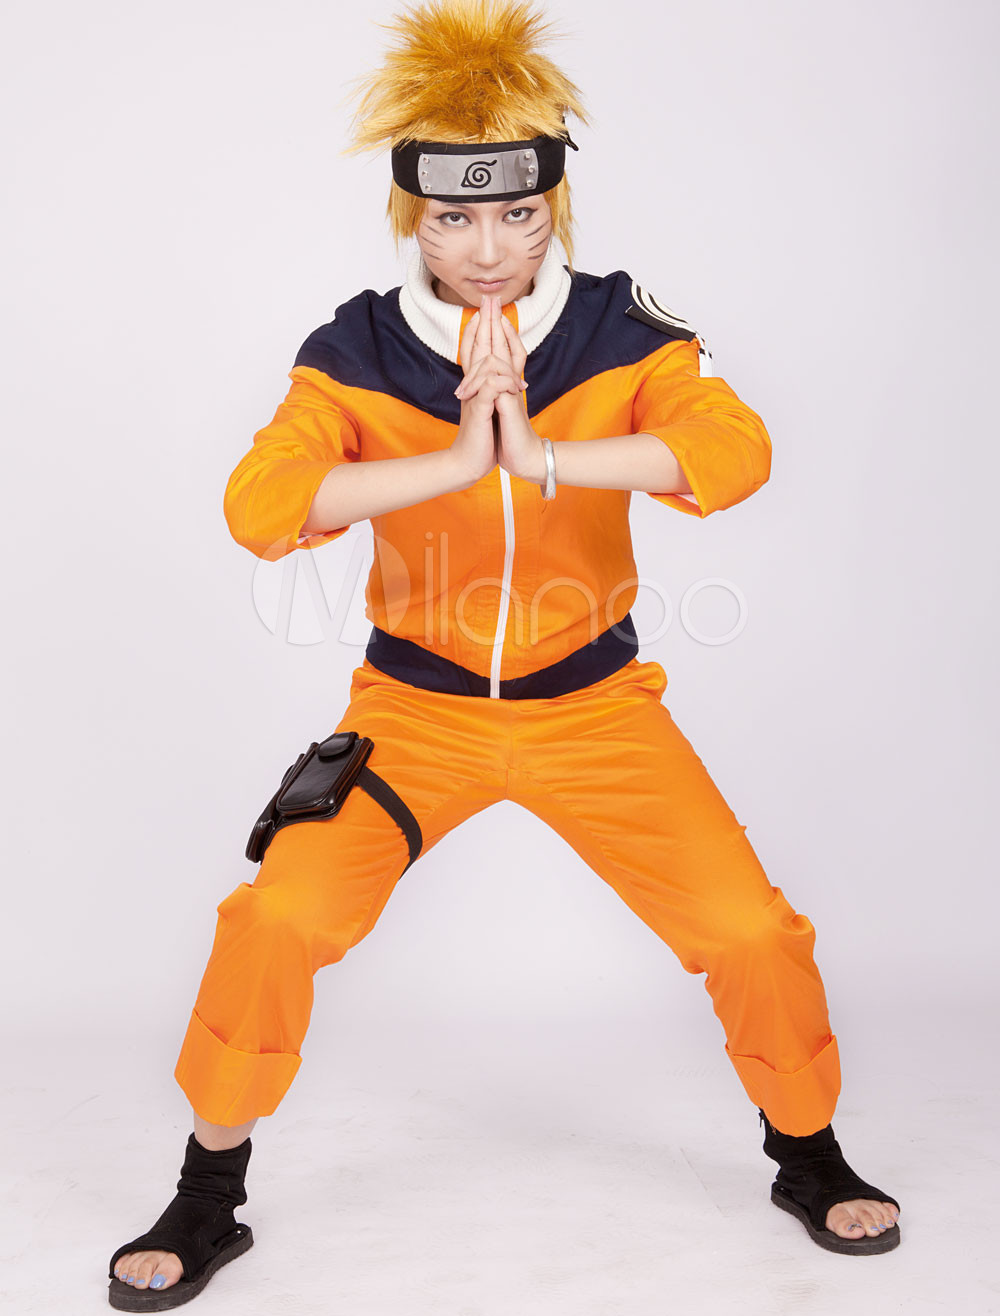 Best ideas about DIY Naruto Costume
. Save or Pin Naruto Uzumaki Anime Halloween Cosplay Costume Milanoo Now.